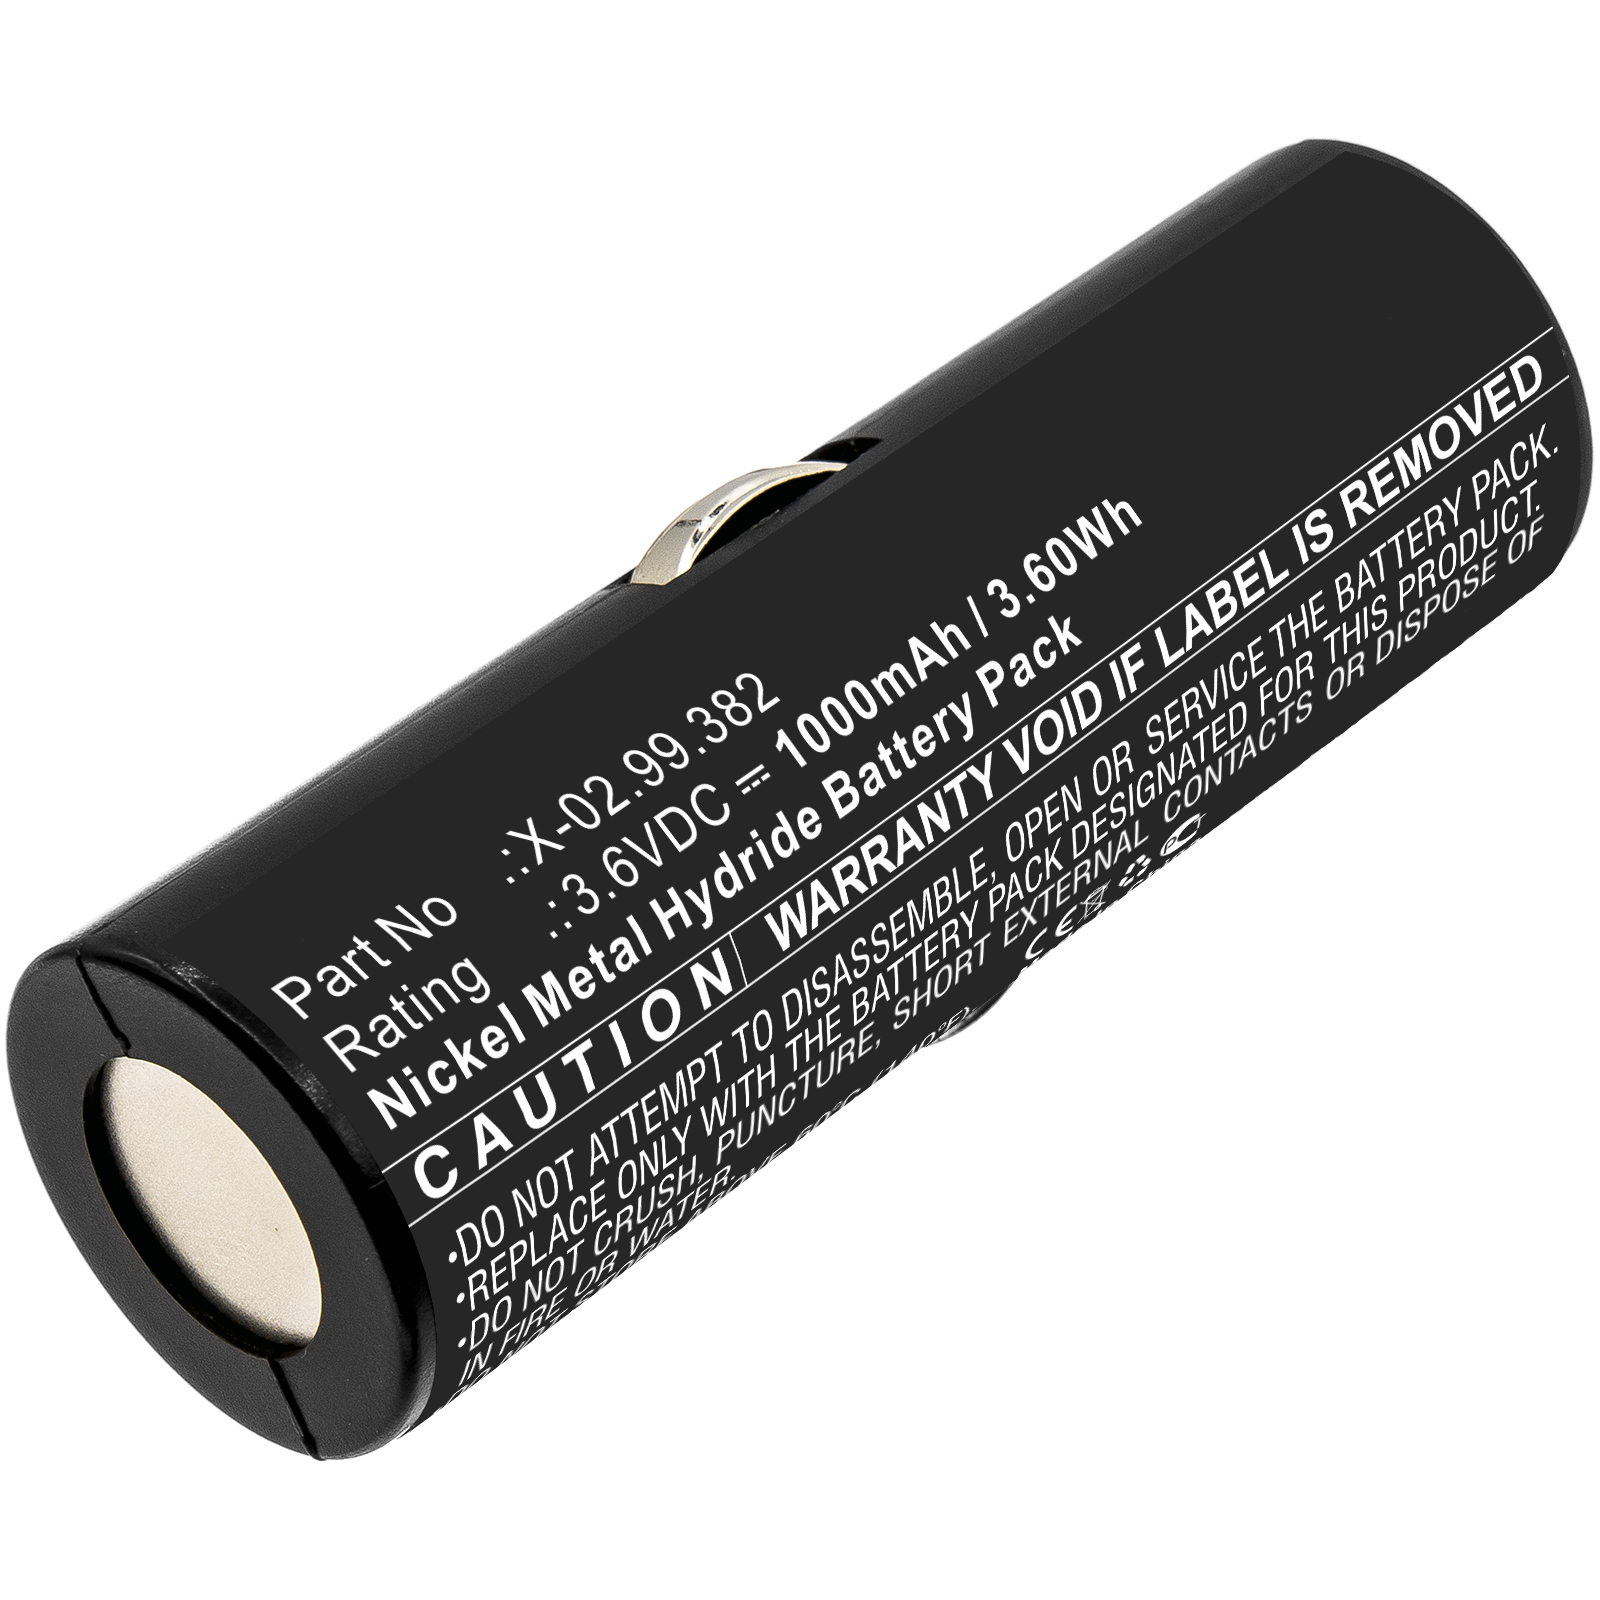 Synergy Digital Medical Battery, Compatible with Heine BATT/110904-A1, X-02.99.380, X-02.99.382 Medical Battery (3.6V, Ni-MH, 1000mAh)